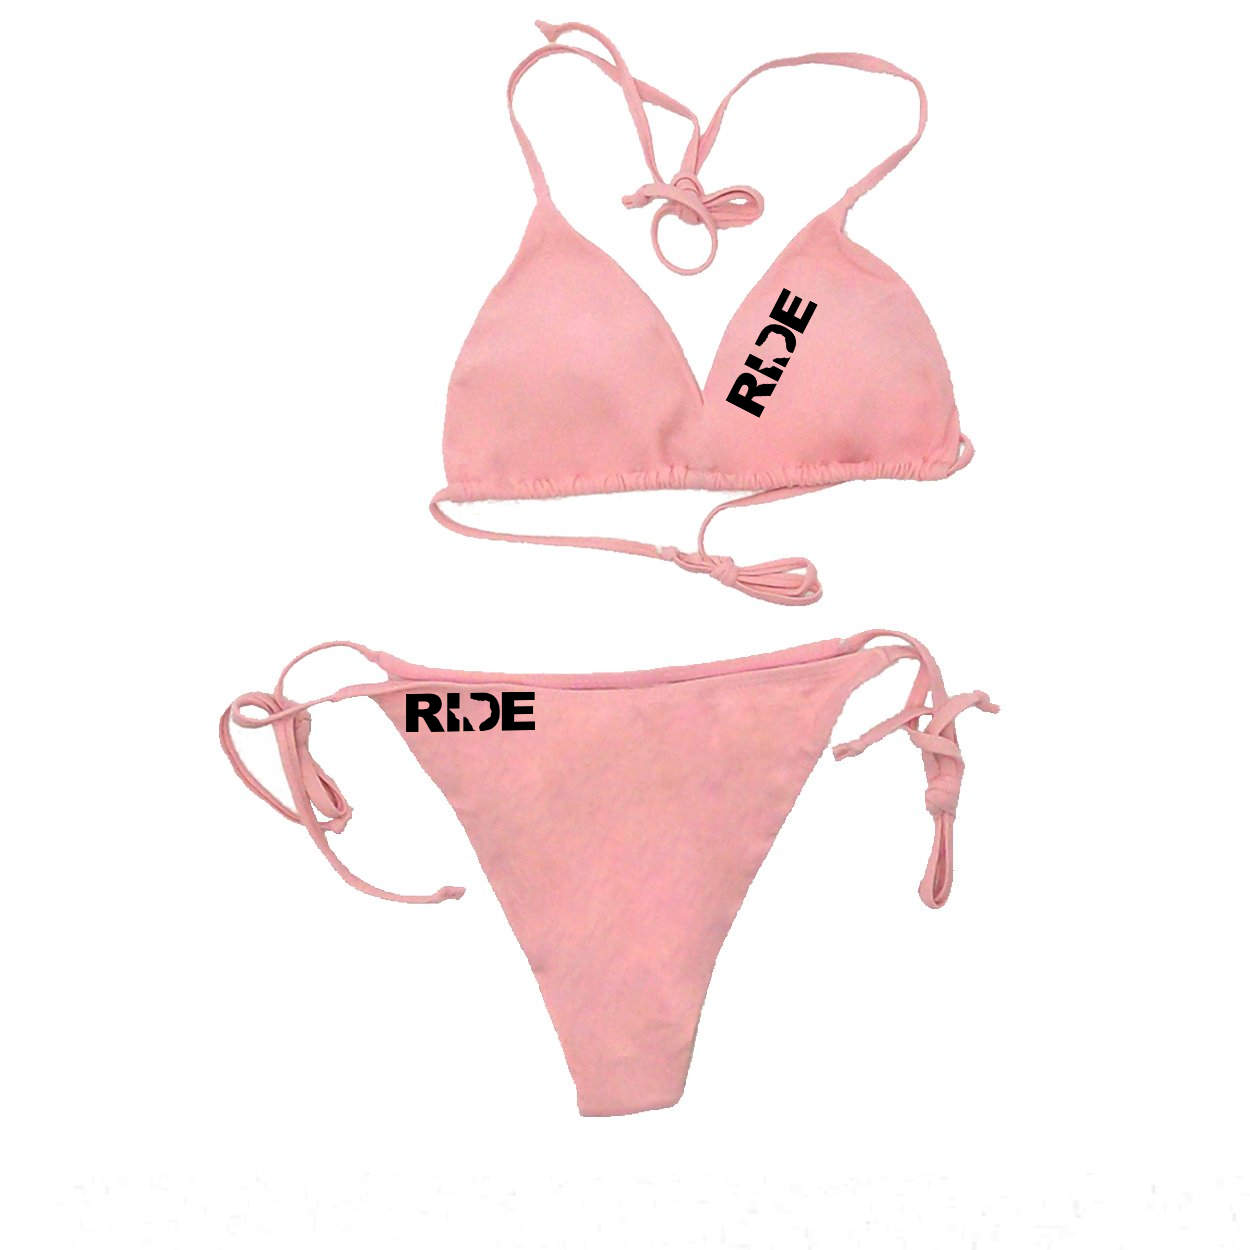 Ride Texas Classic Womens Padded Halter Triangle Tie Side Two-Piece Swimsuit Basics Bikini Pink (Black Logo)